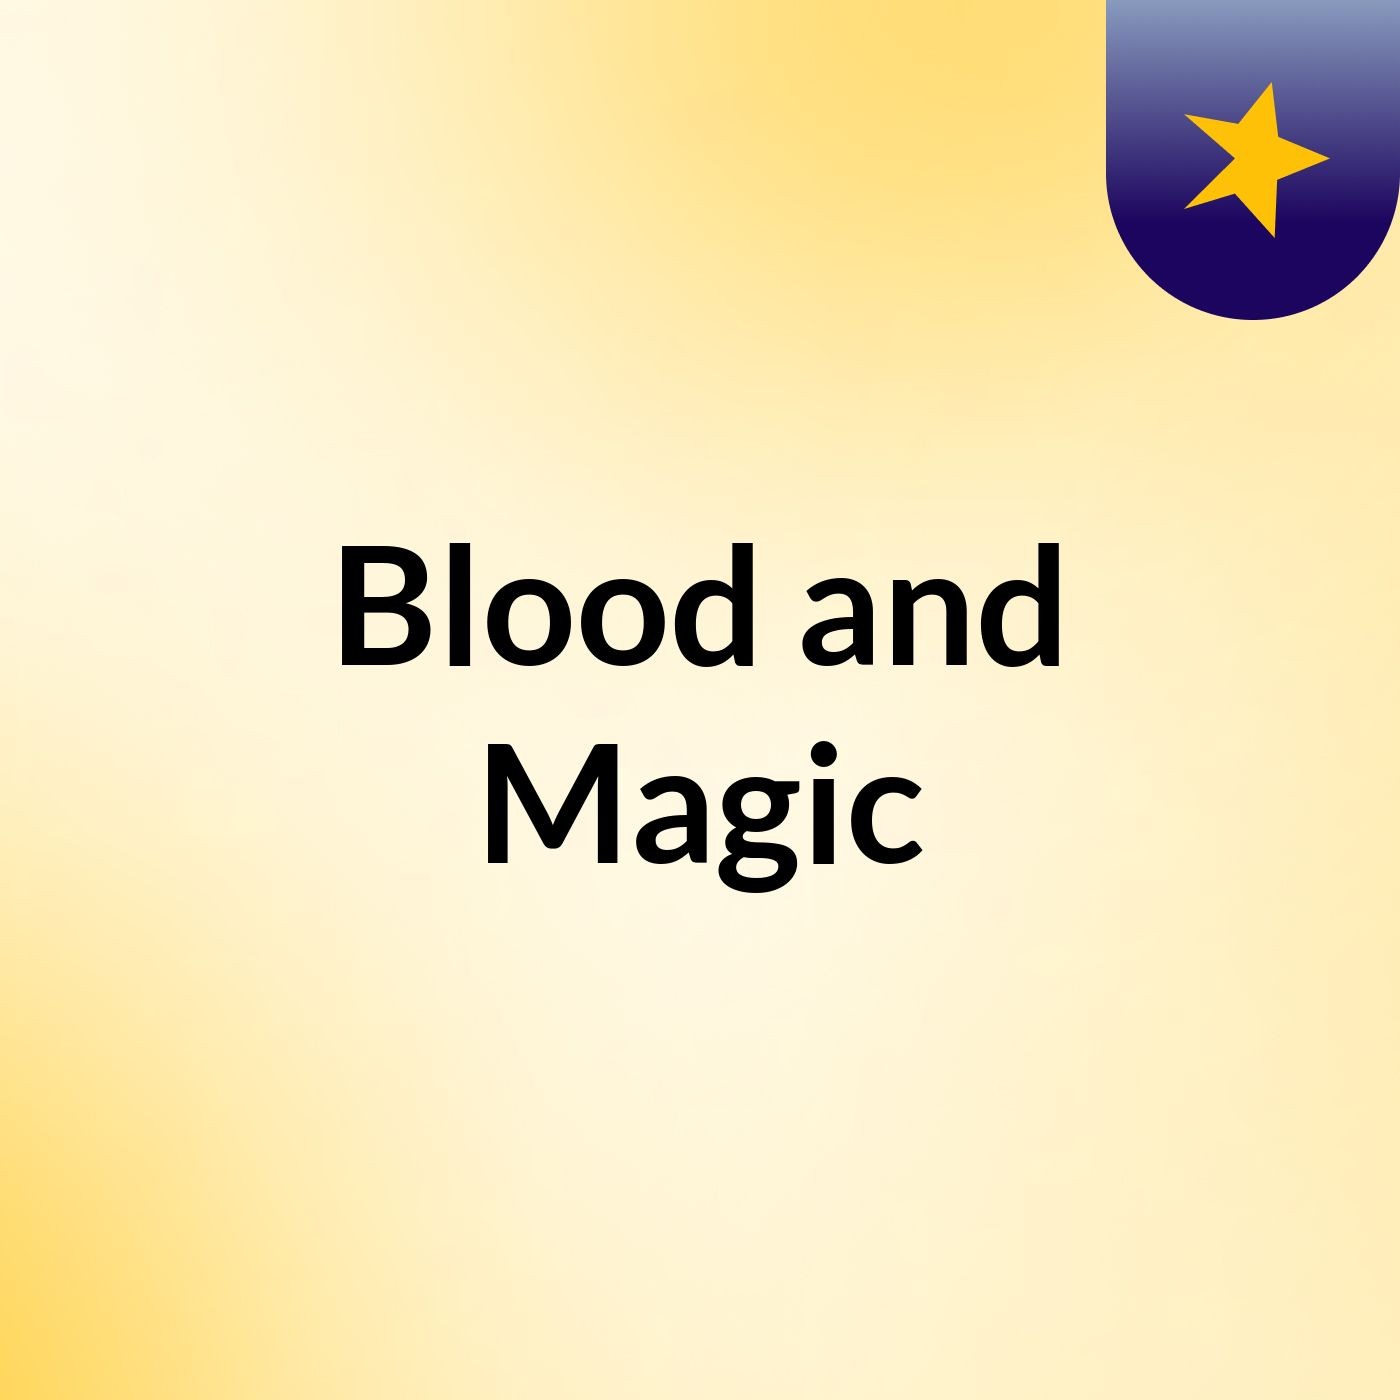 Blood and Magic